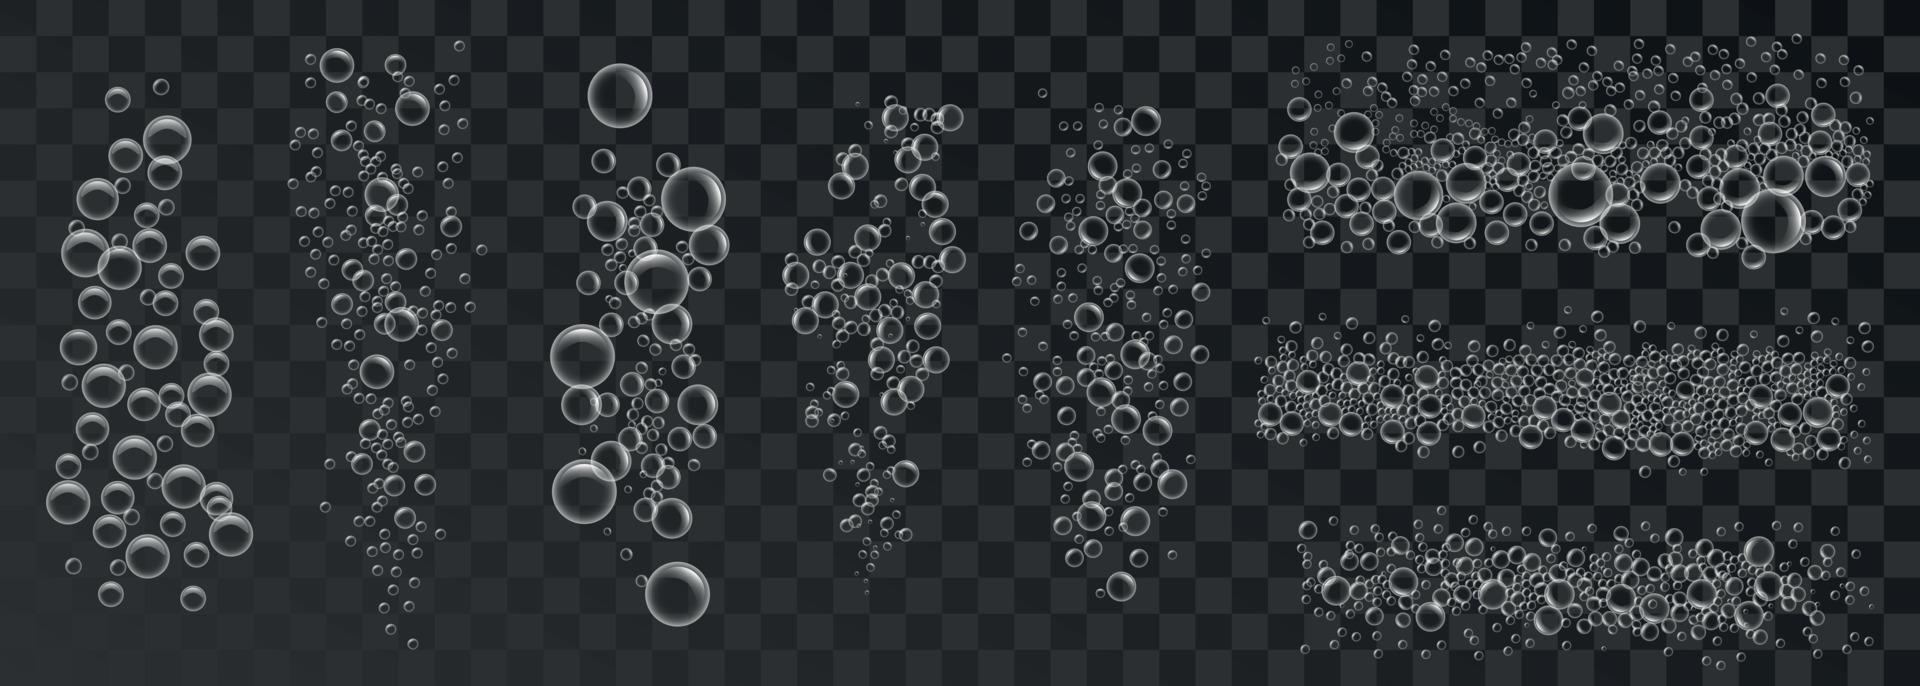 Foam bubble set concept background, realistic style vector